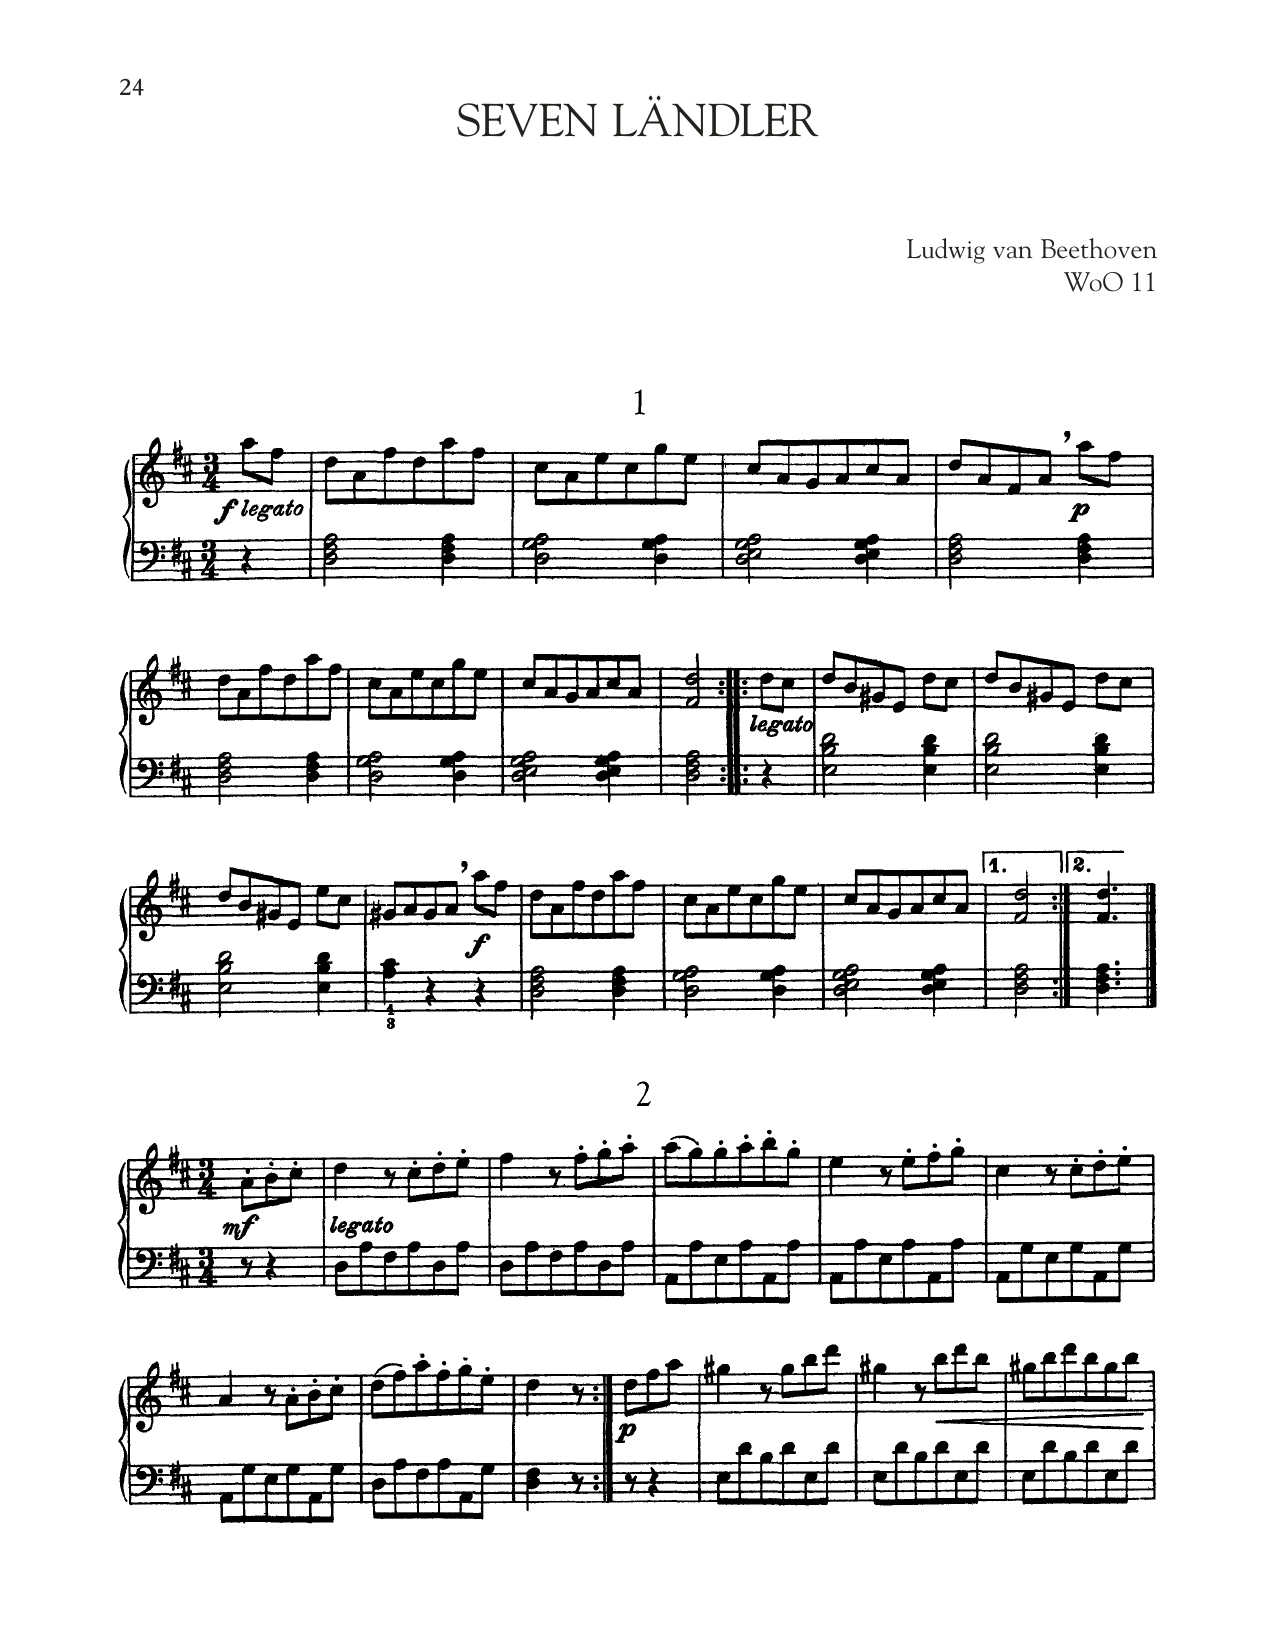 Download Ludwig van Beethoven Seven Landler, WoO 11 Sheet Music